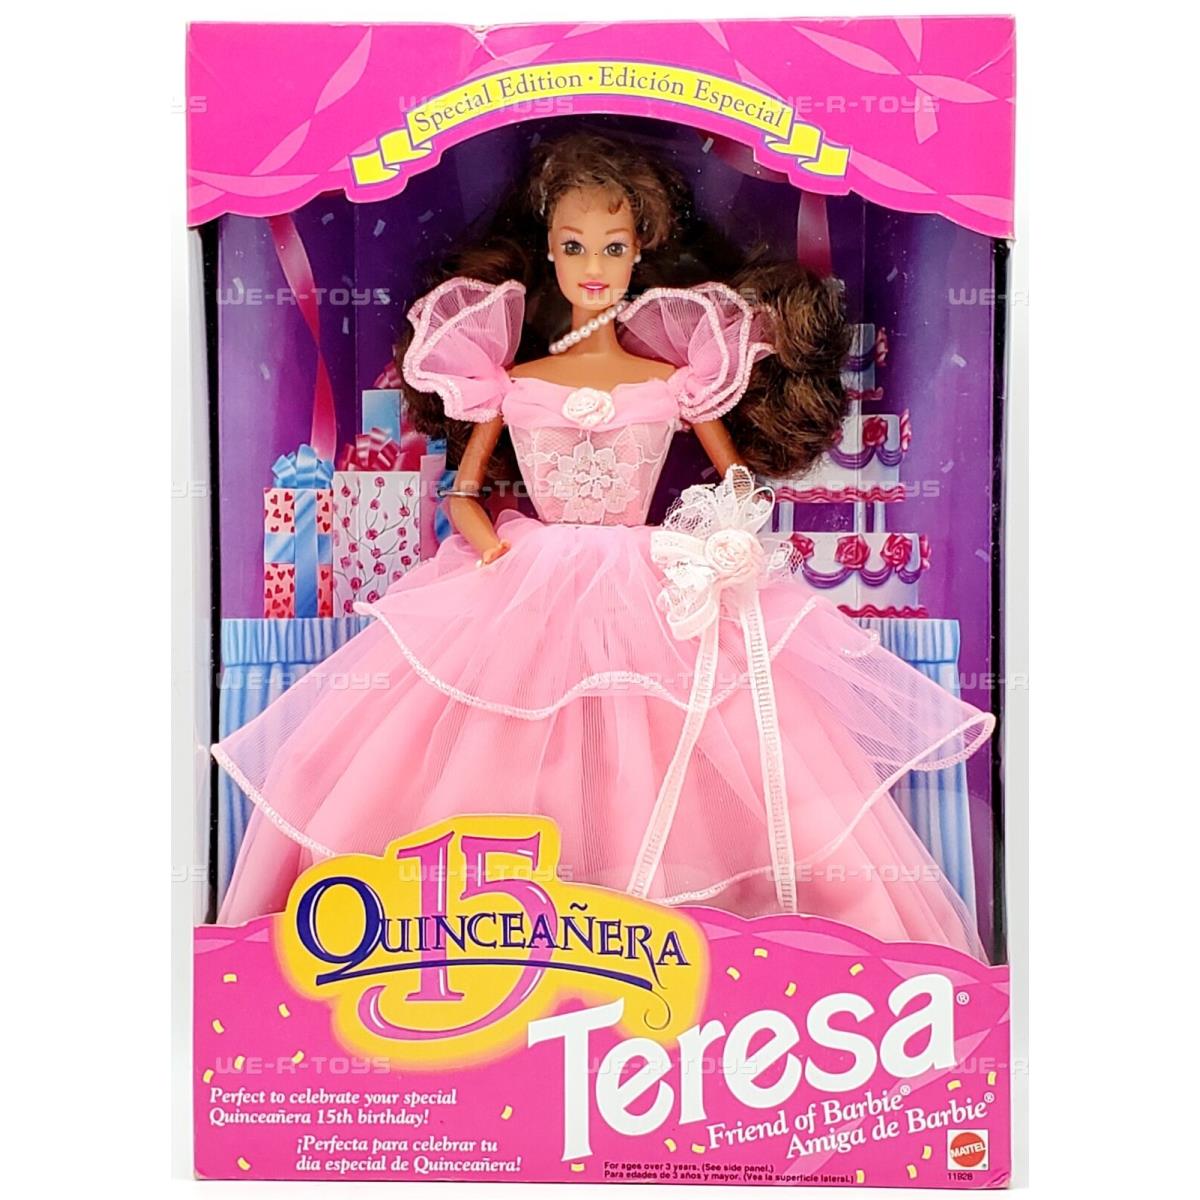 Quinceanera 15 Special Edition Teresa Friend of Barbie Doll 1994 Mattel 11928